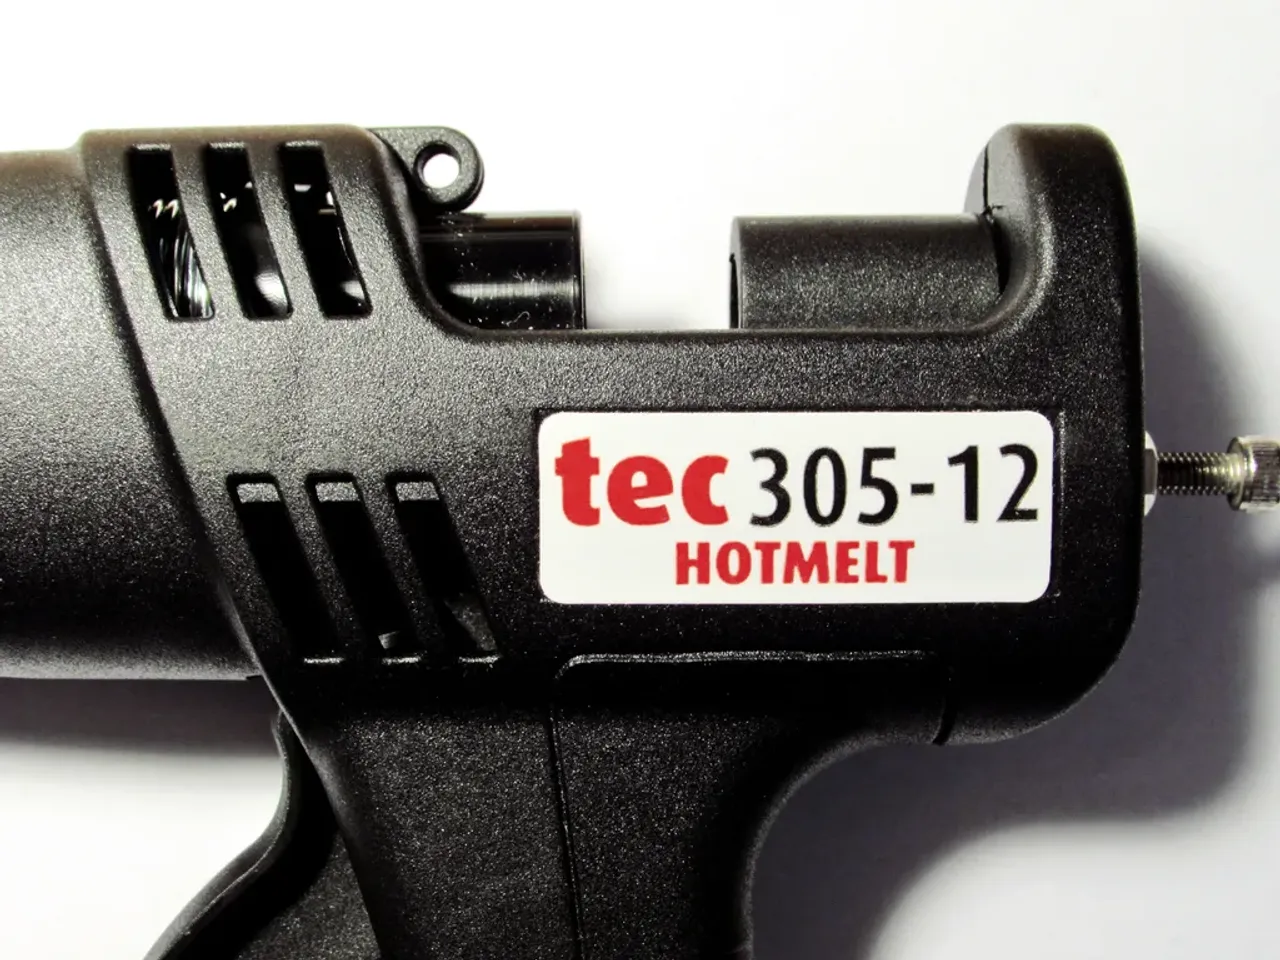 Tec 305 Low Temp Entry Level Hot Melt Glue Gun